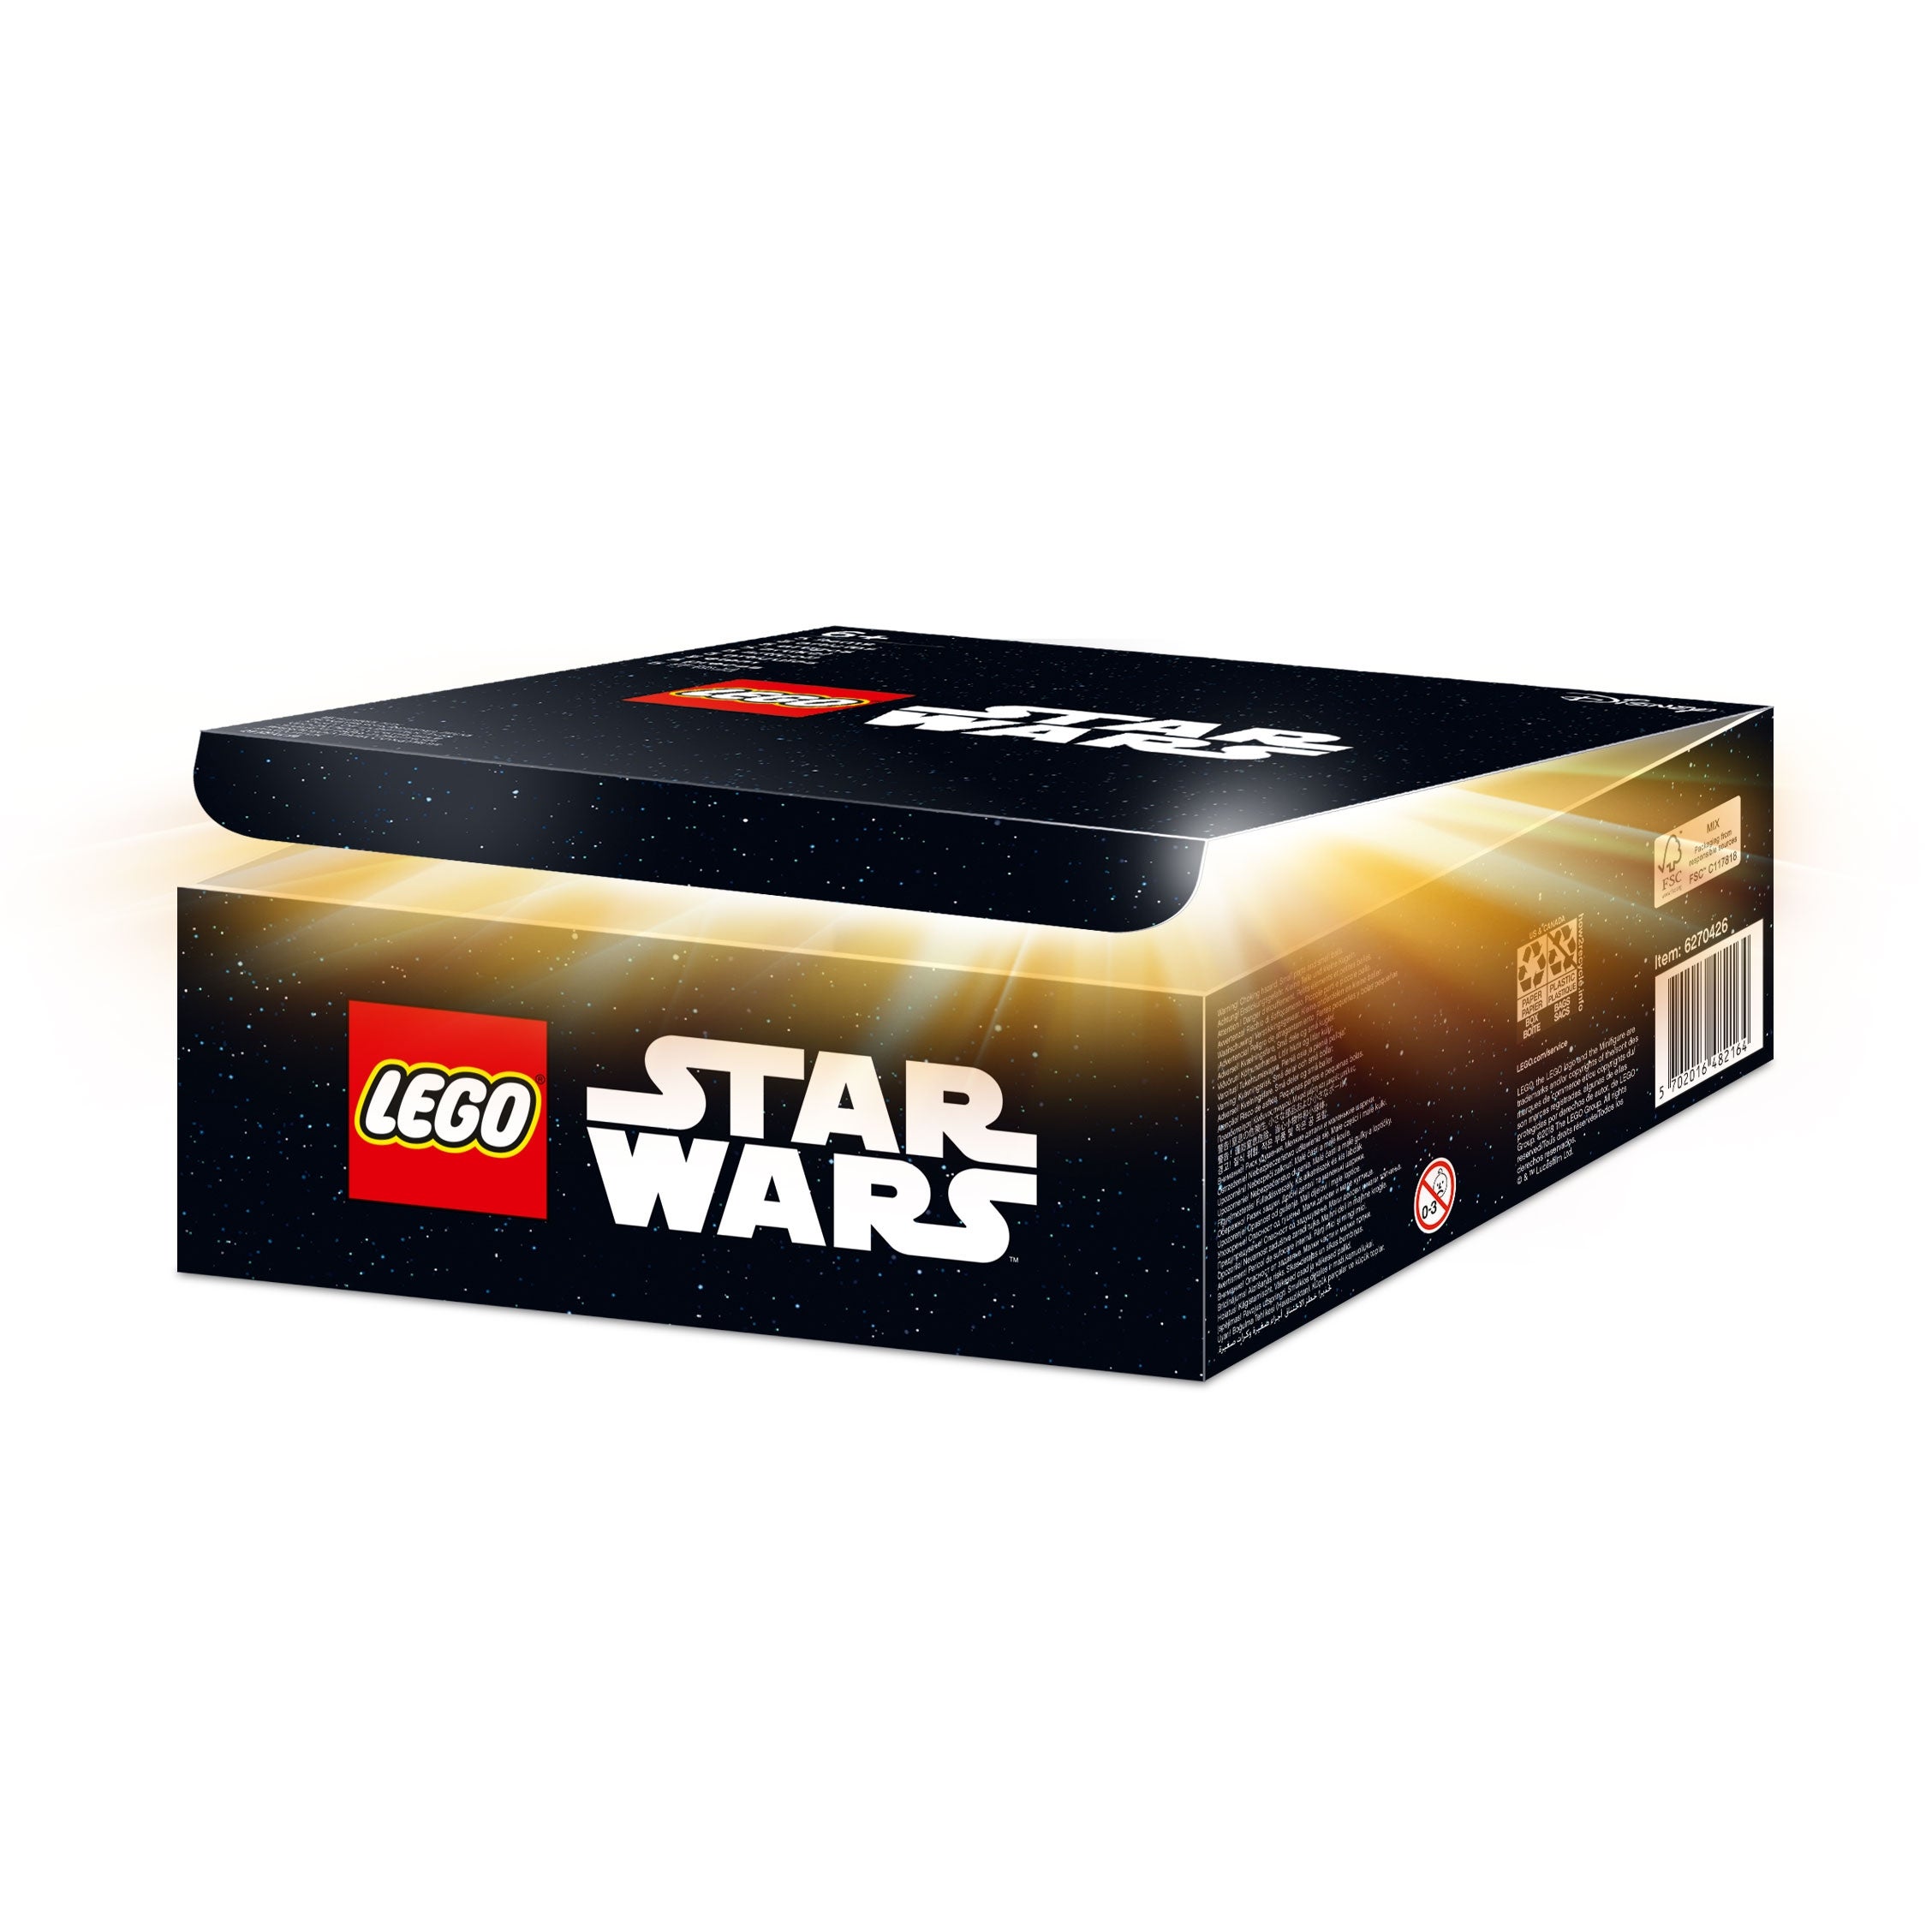 Oficial Lego Droid Lego Star Wars Minifigura Misterio /& Mystery Bolsa Ciega